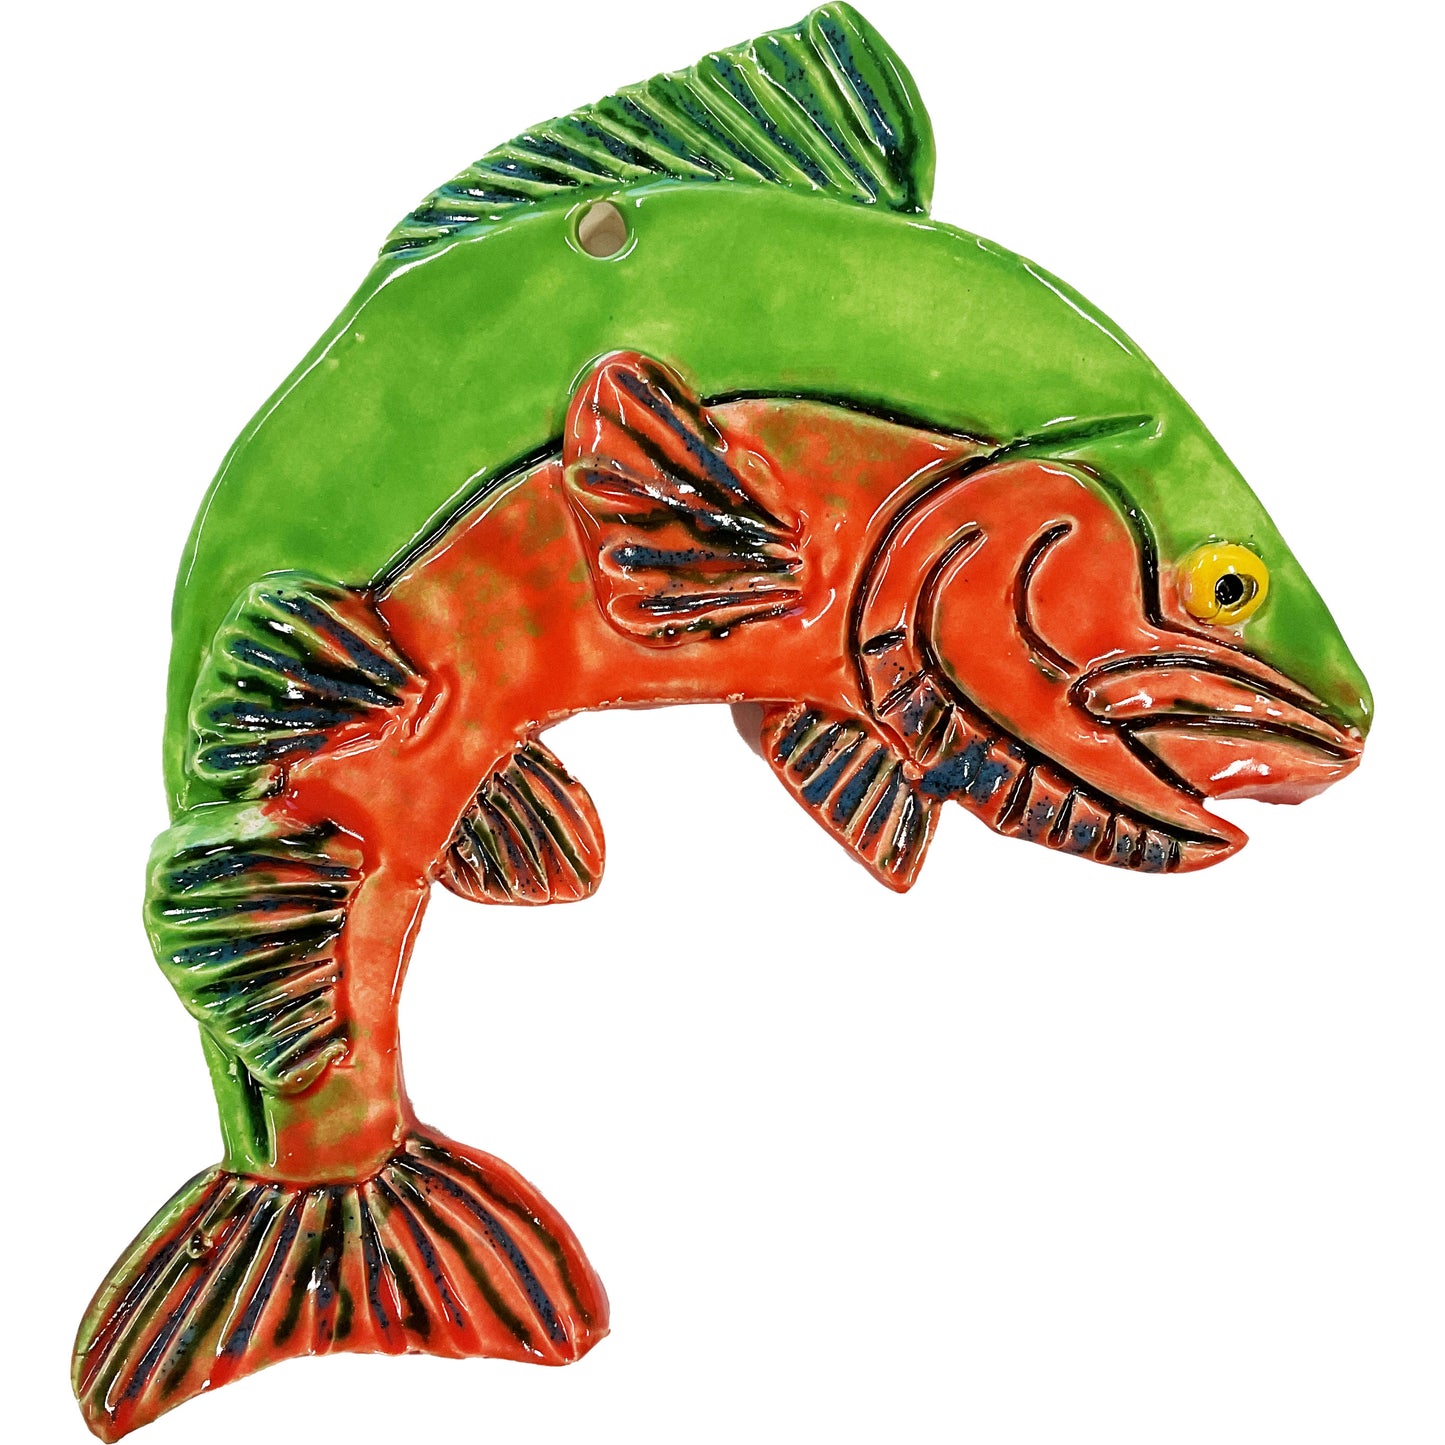 Ceramic Arts Handmade Clay Crafts Fresh Fish Glazed 6.5-inch x 6.5-inch made by Lisa Uptain